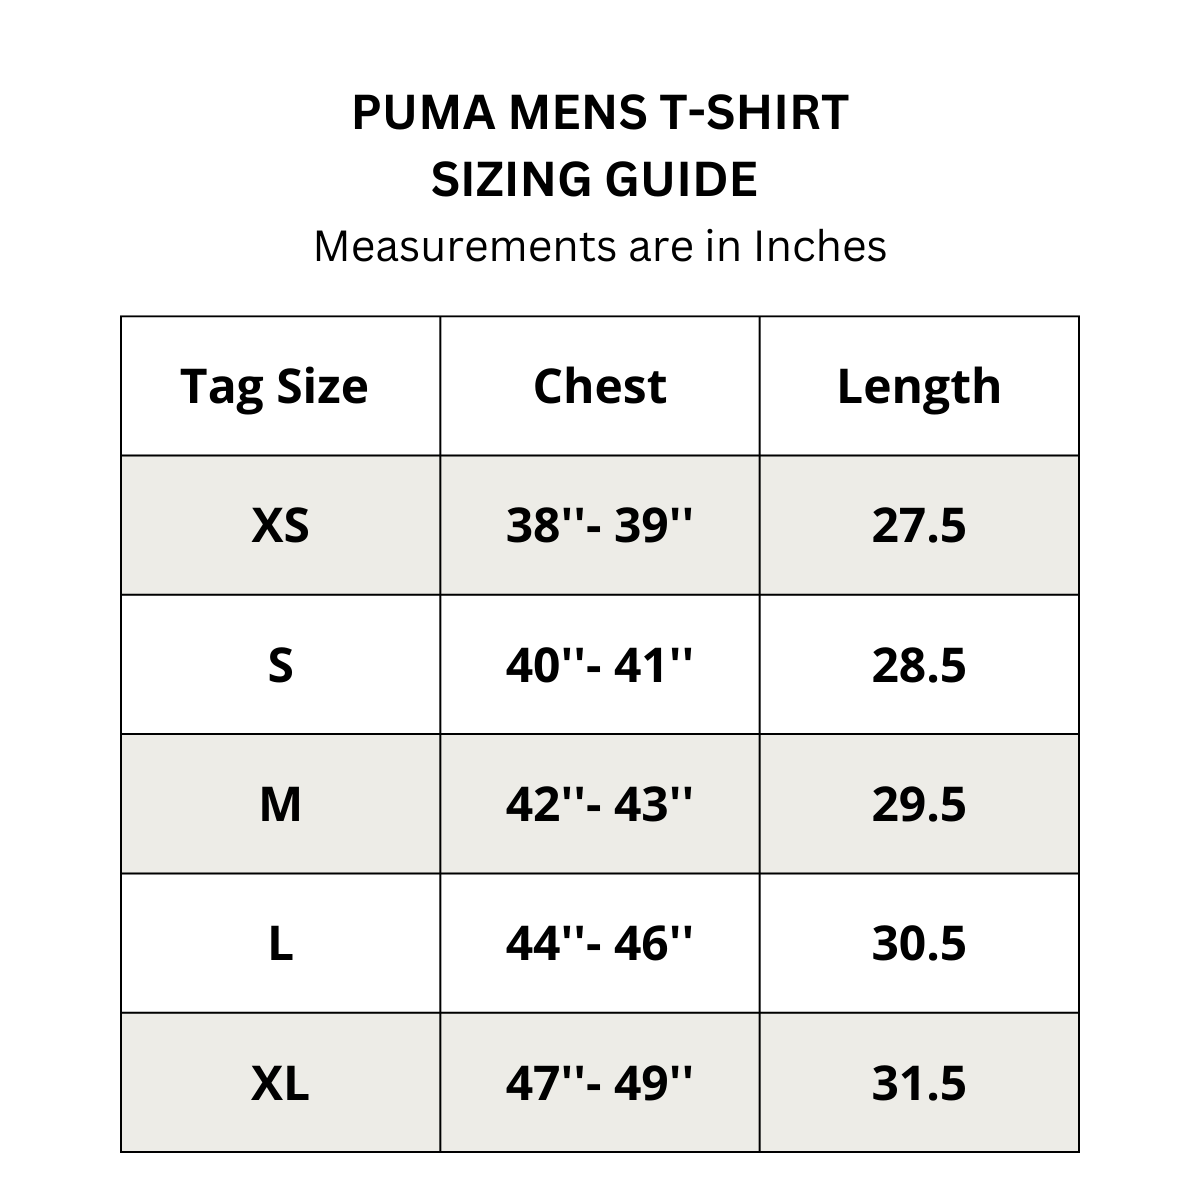 Puma Icon Men's Golf Polo T-Shirt (US Size)